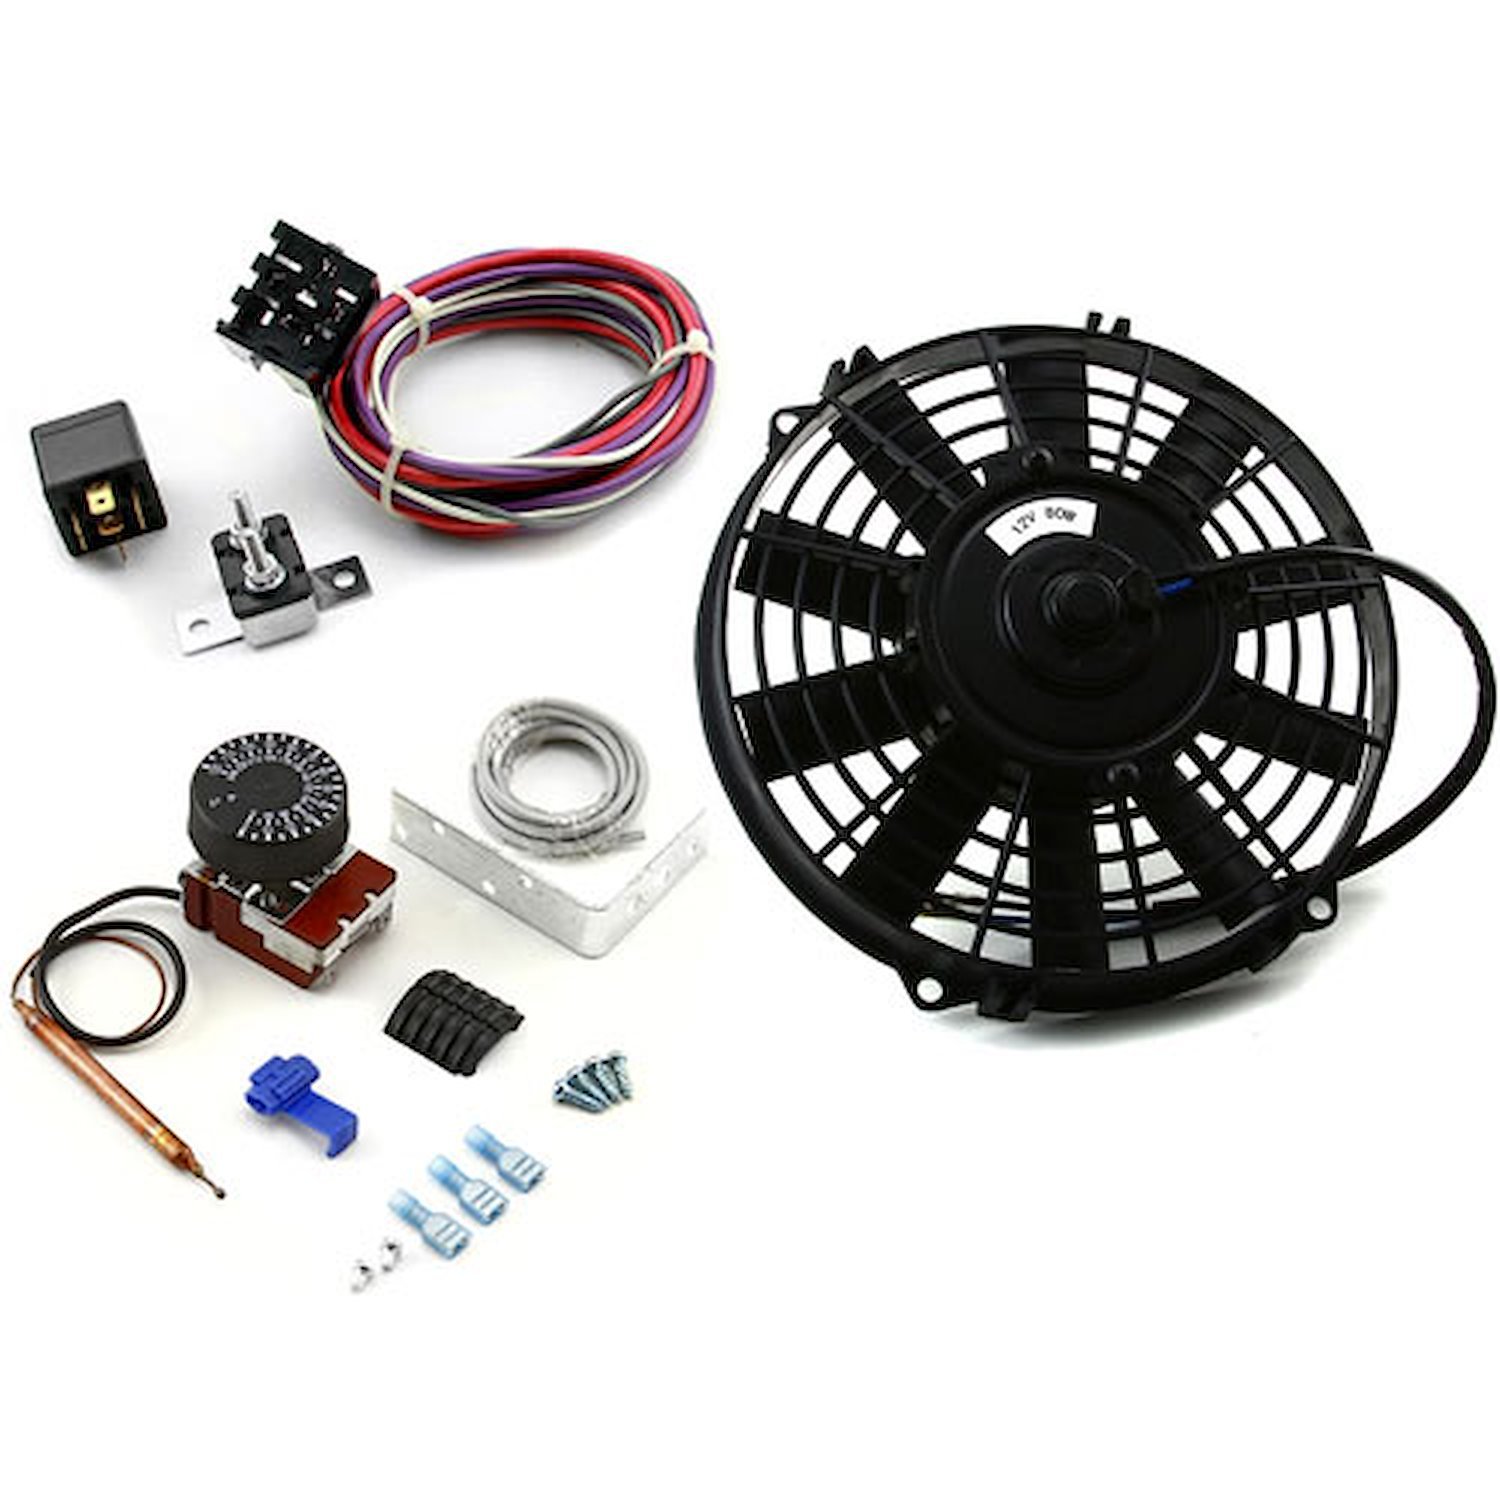 Electric Fan Kit 605 CFM Includes: